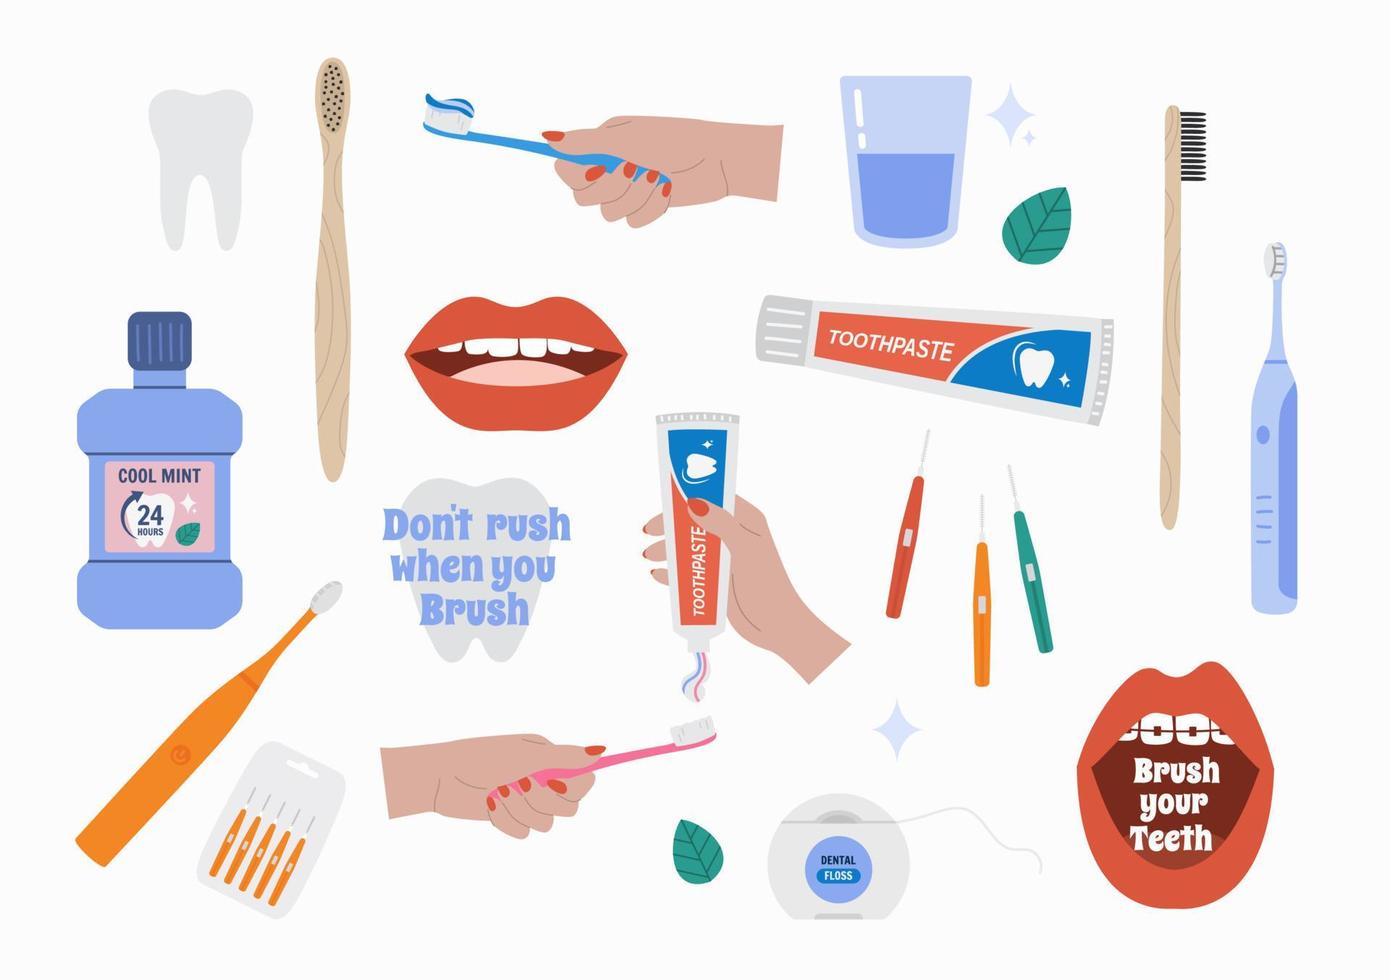 mundwasser handgezeichnete illustrationen gesetzt. Zahnbürste, Zahnpasta, Zahnseide. Zahnpflege. Vektor